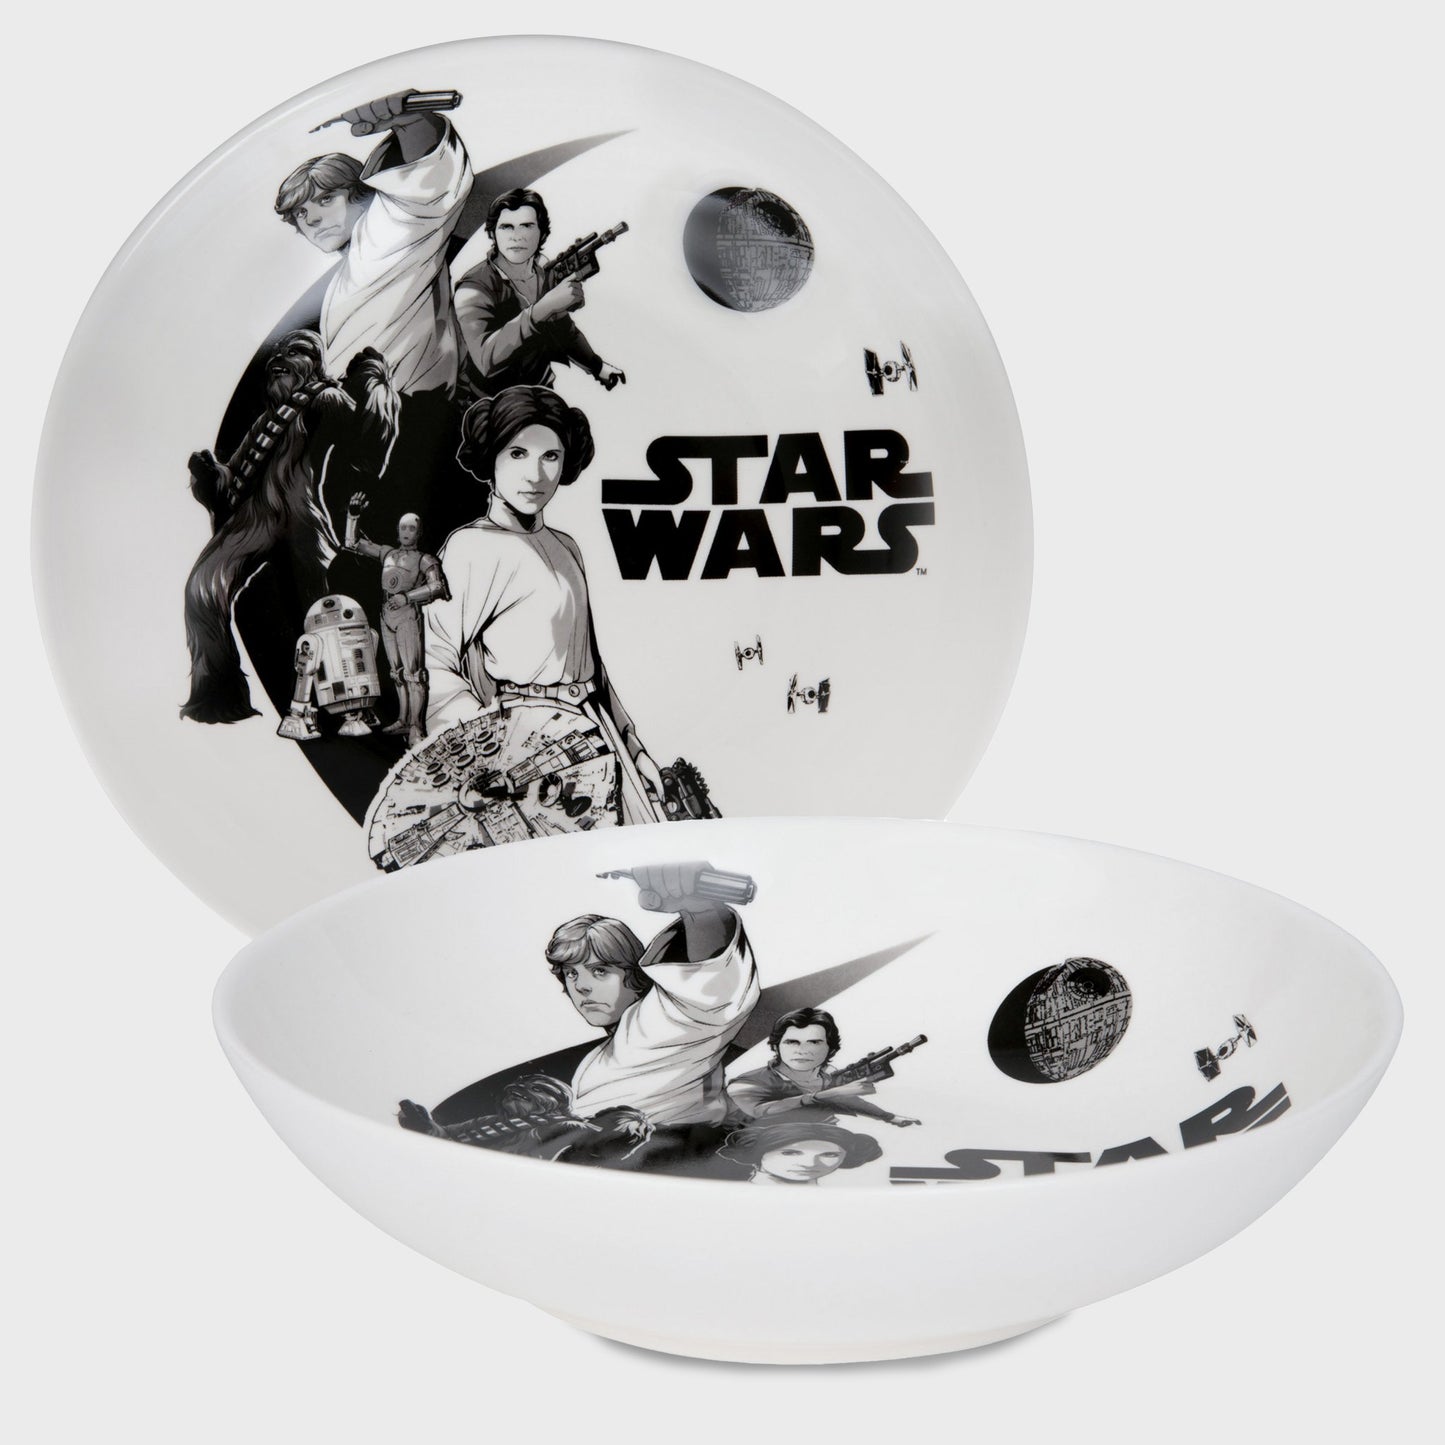 Star Wars "Rebels" (Disney) 9 inch Ceramic Bowl